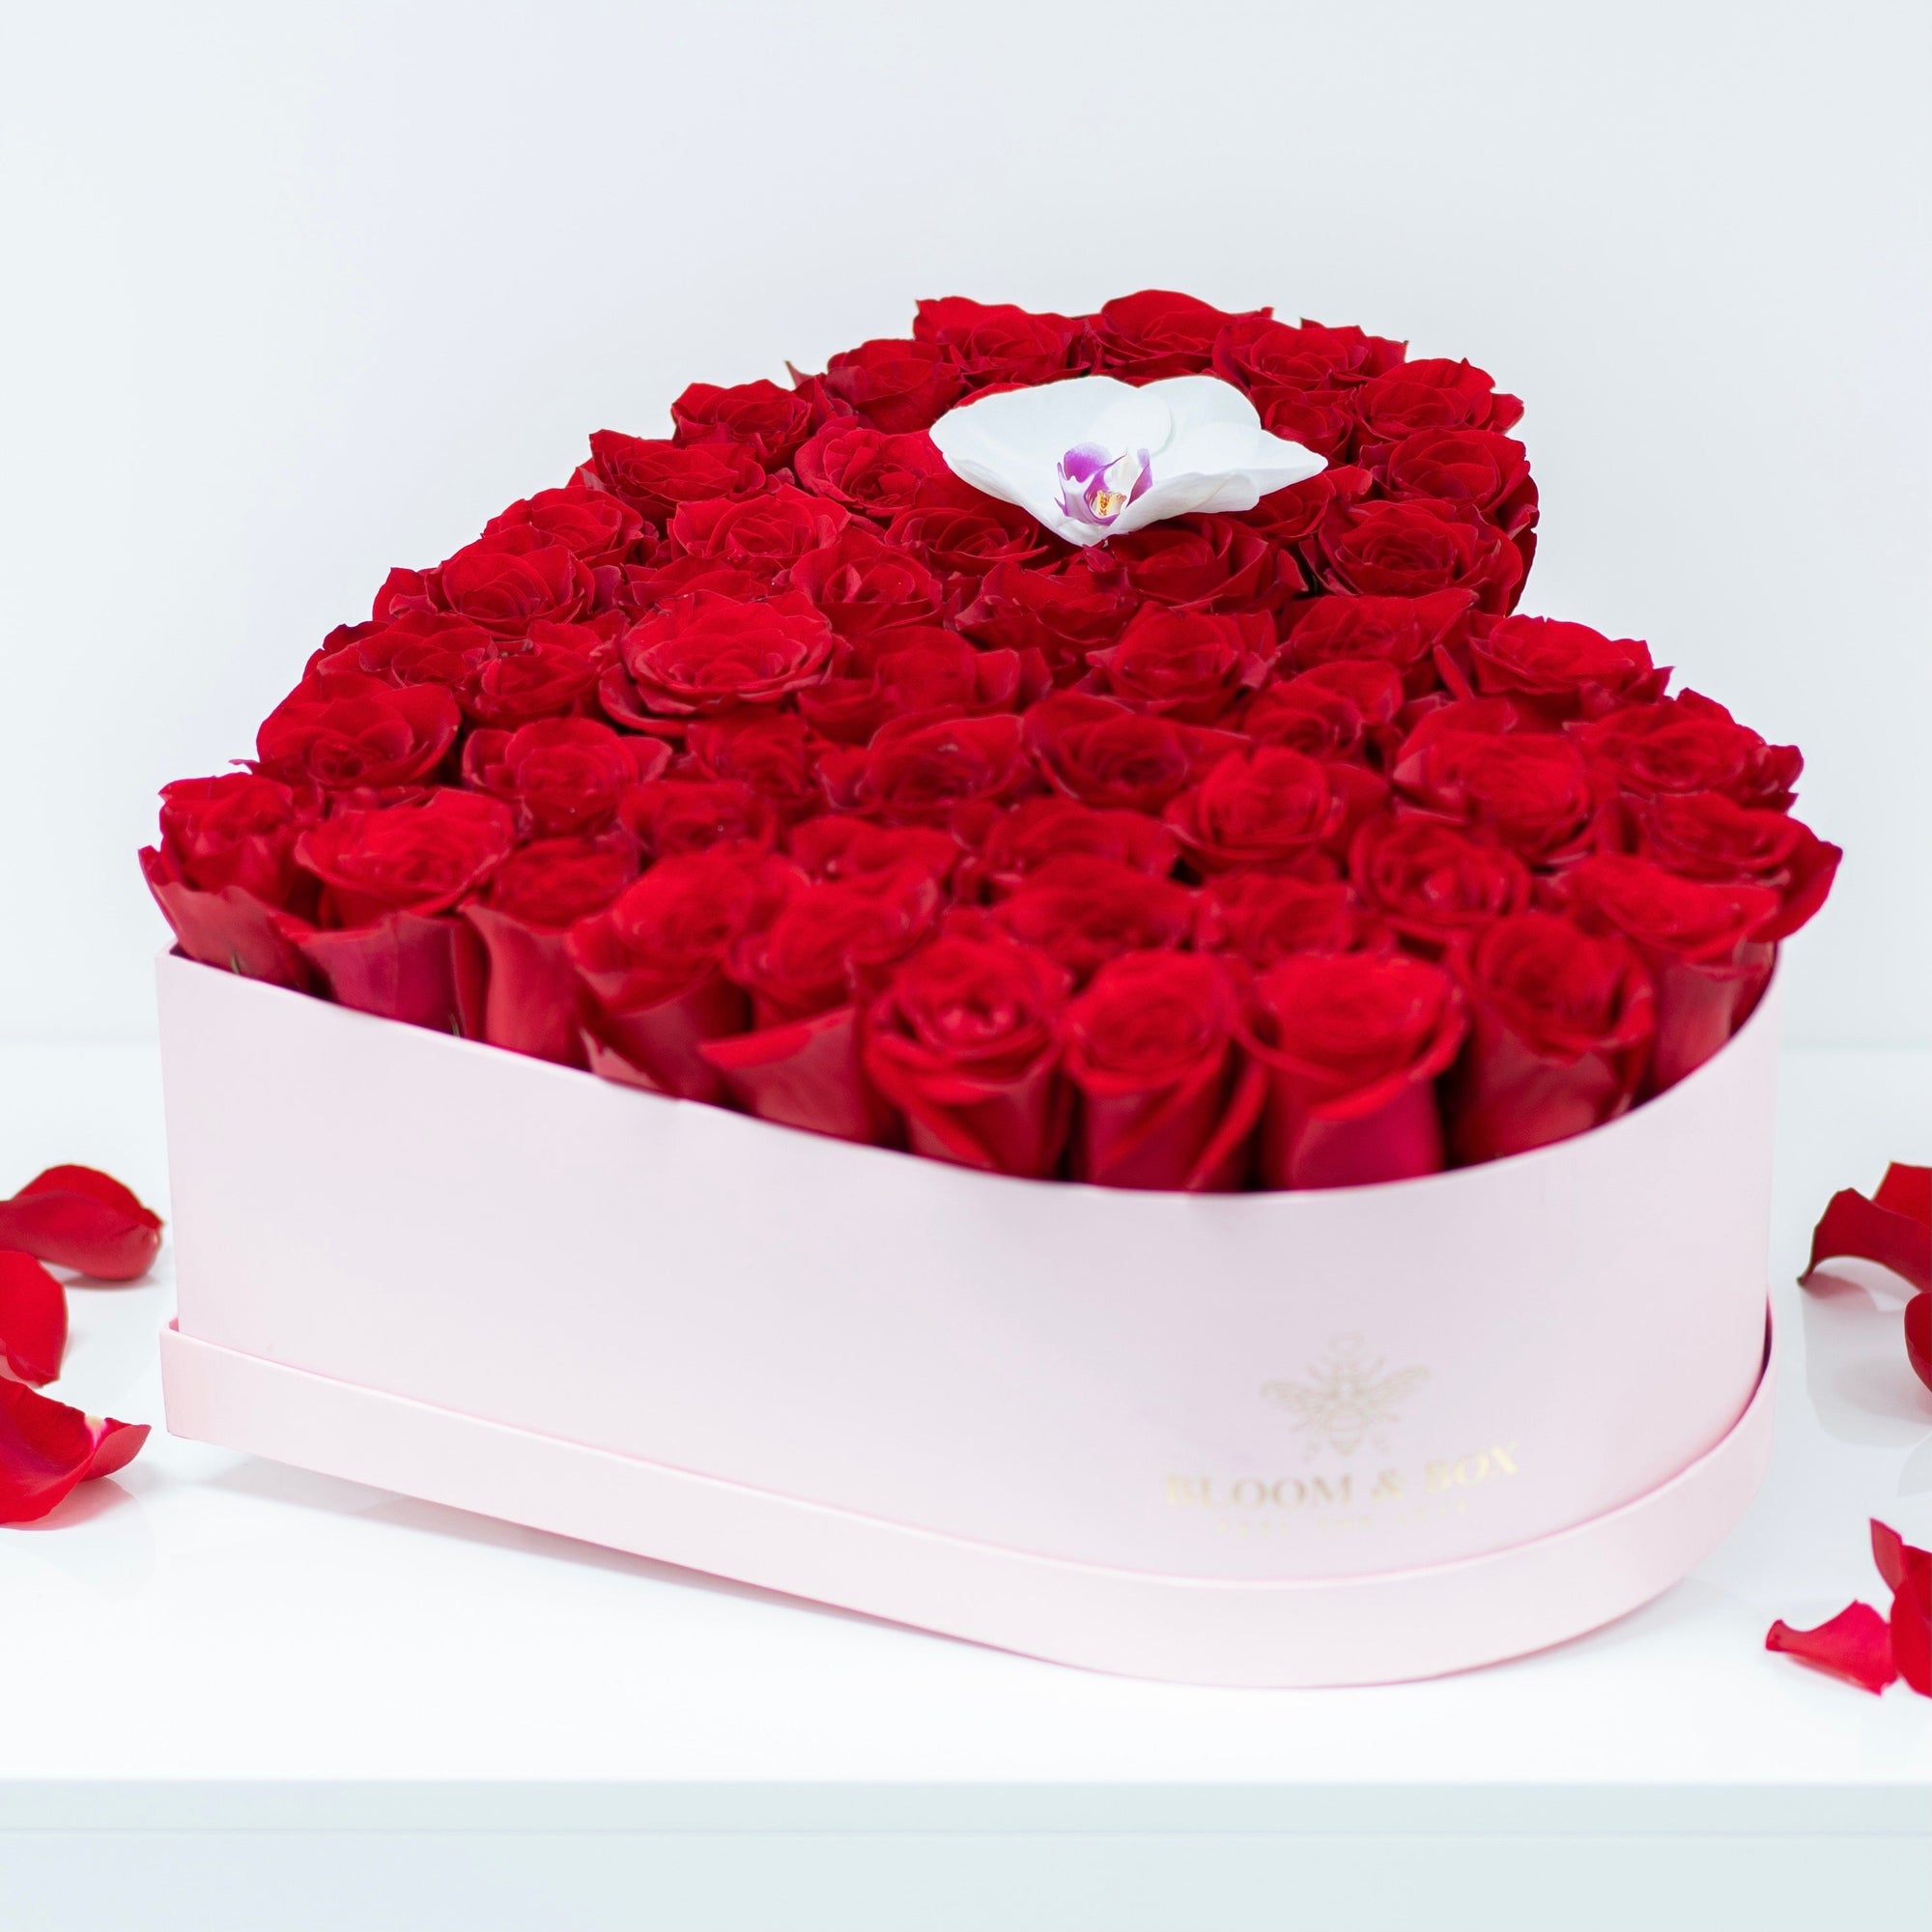 The I Love You heart Box - bloomandboxflowers